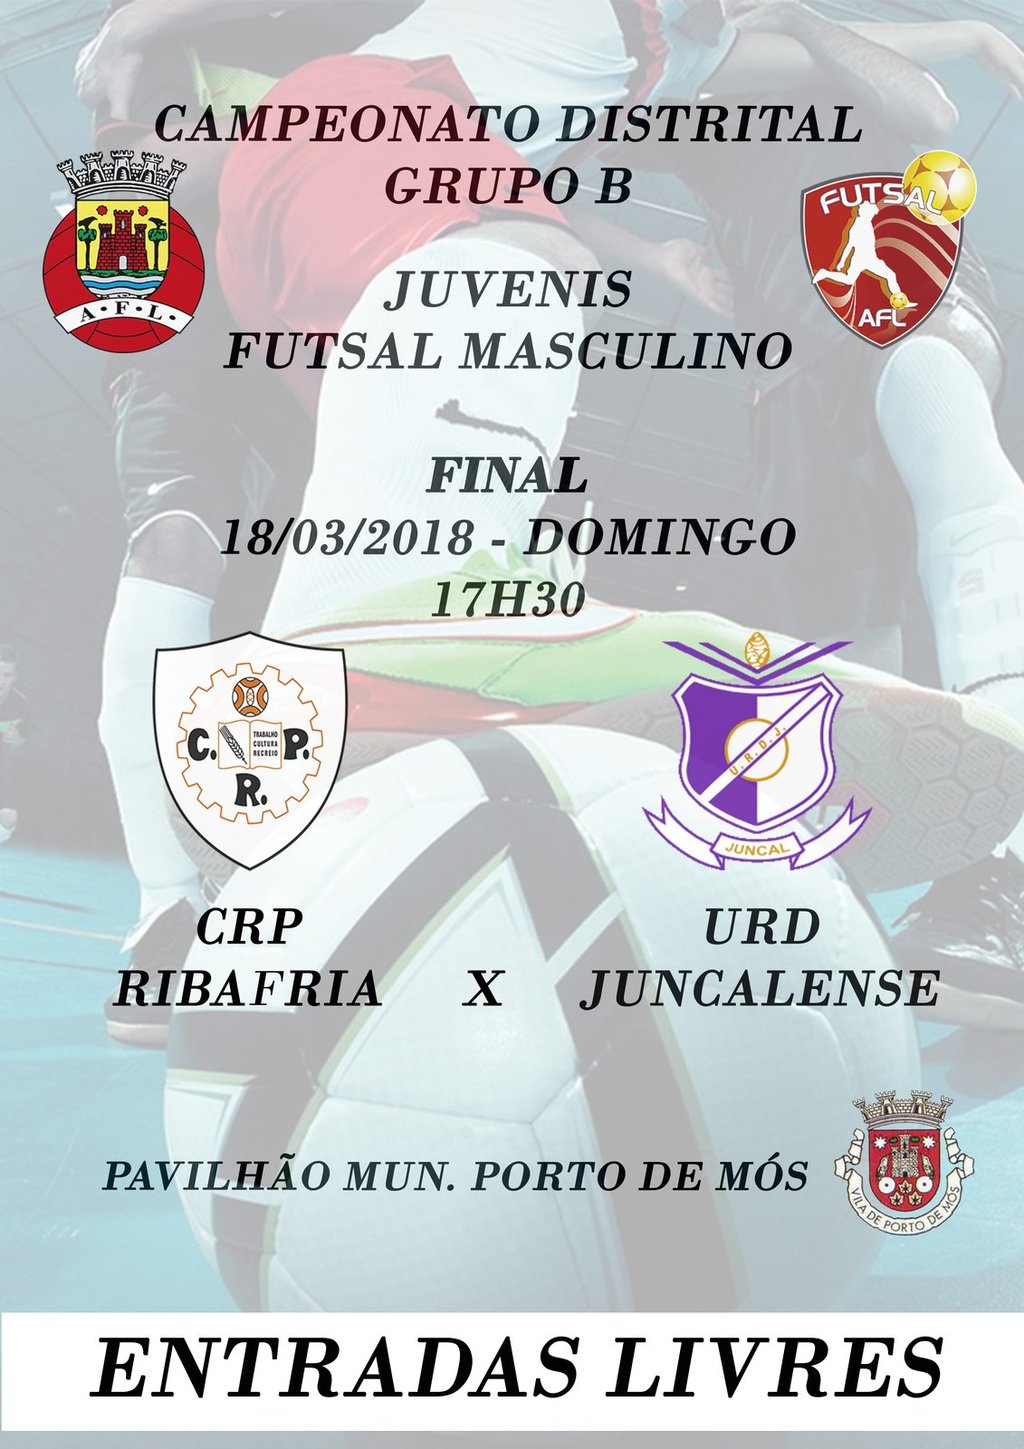 Campeonato Distrital de Futsal masculino Juvenis grupo B